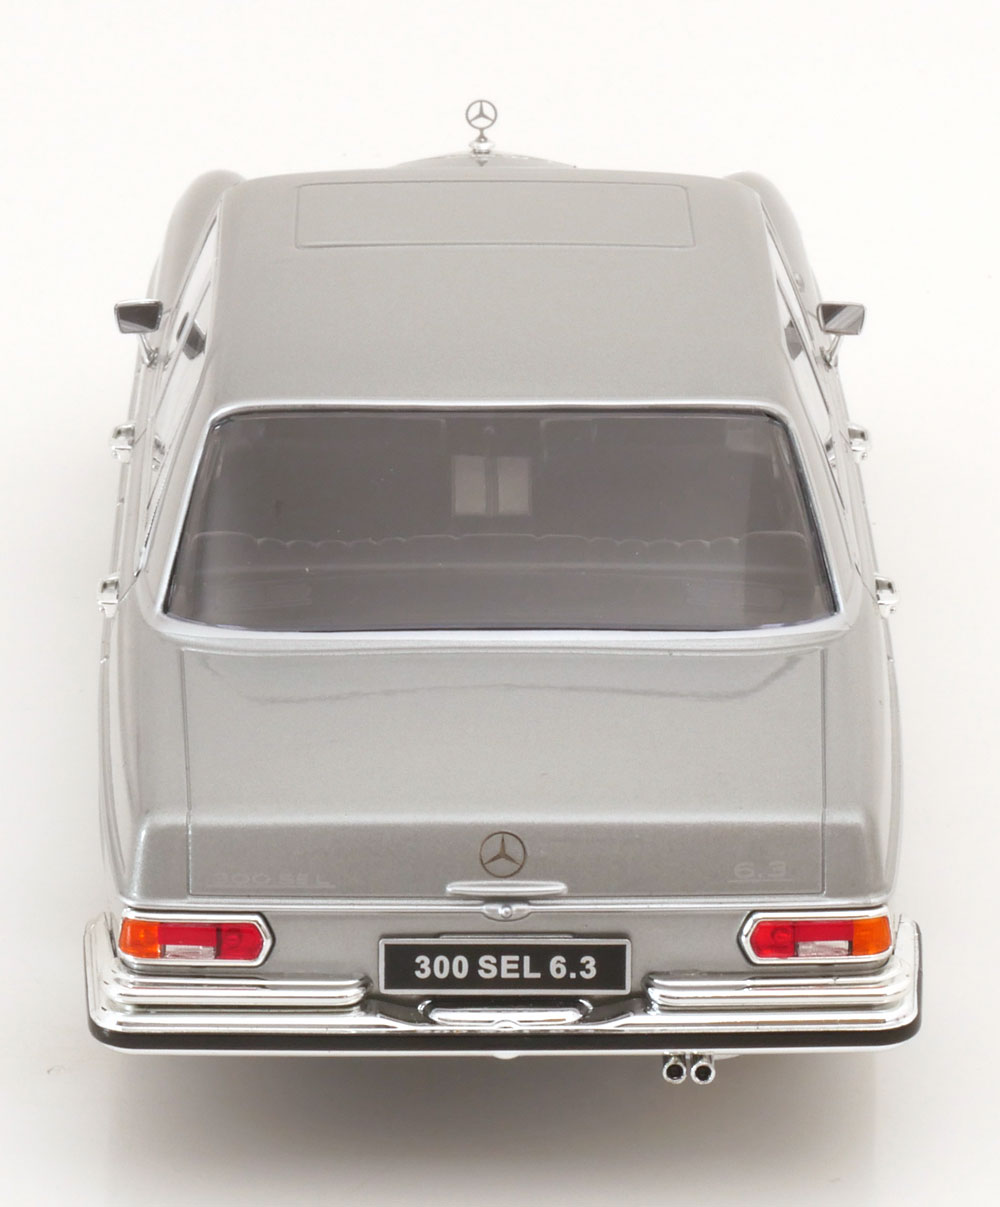 1:18 KK-Scale Mercedes 300 SEL 6.3 W109 1968 silver-metallic